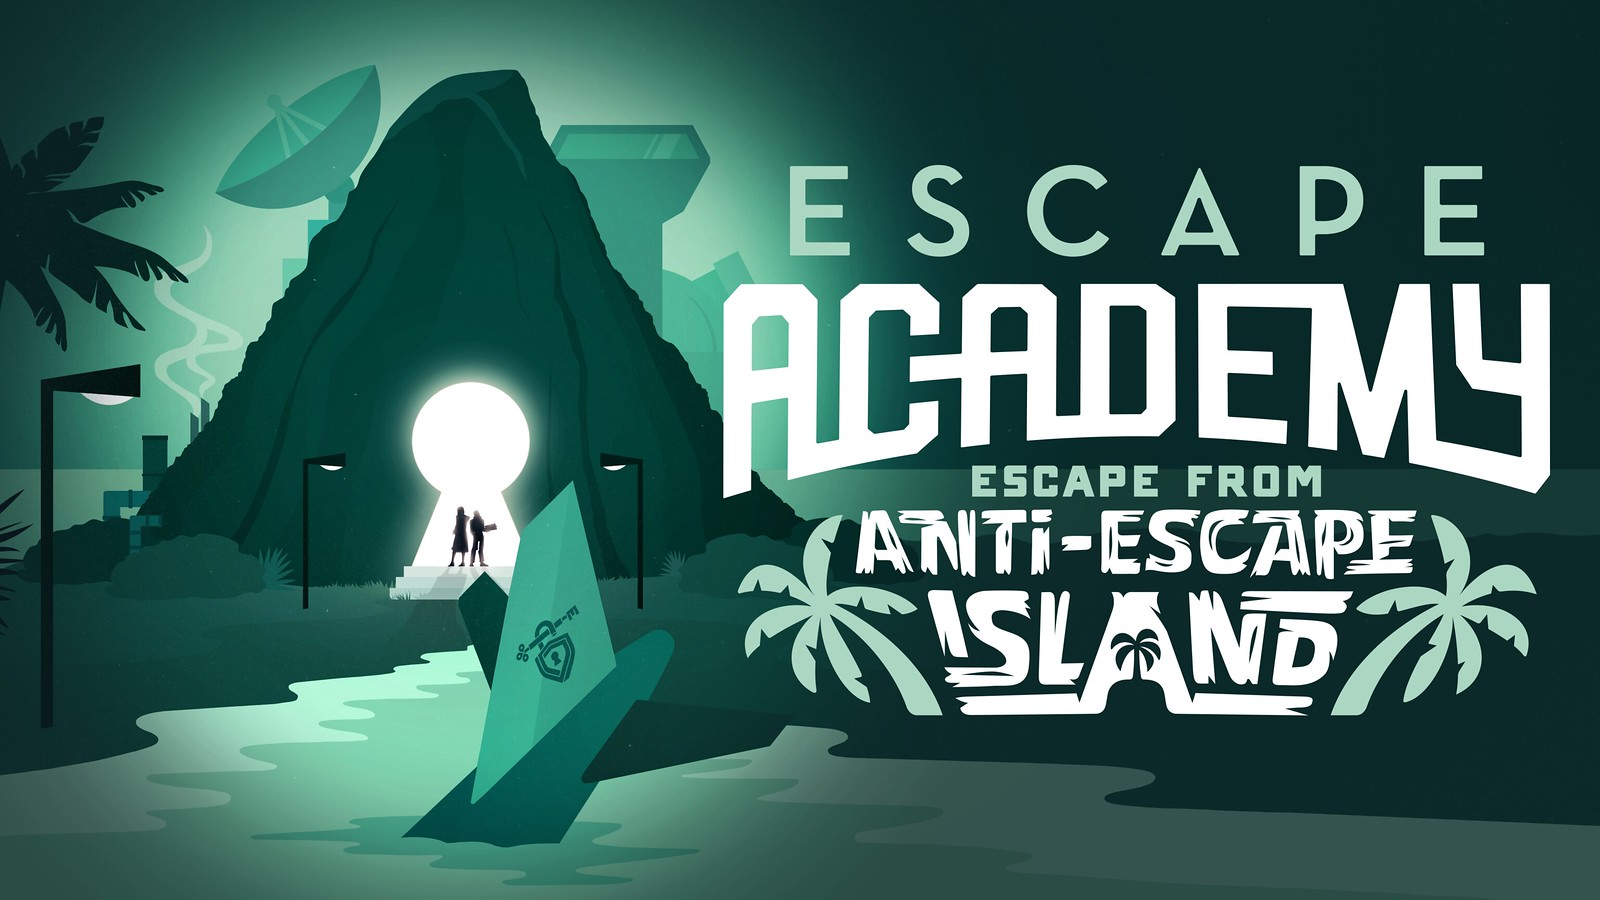 Complex puzzles, intricate room flows: how Escape Academy’s Escape from Anti-Escape Island DLC was built